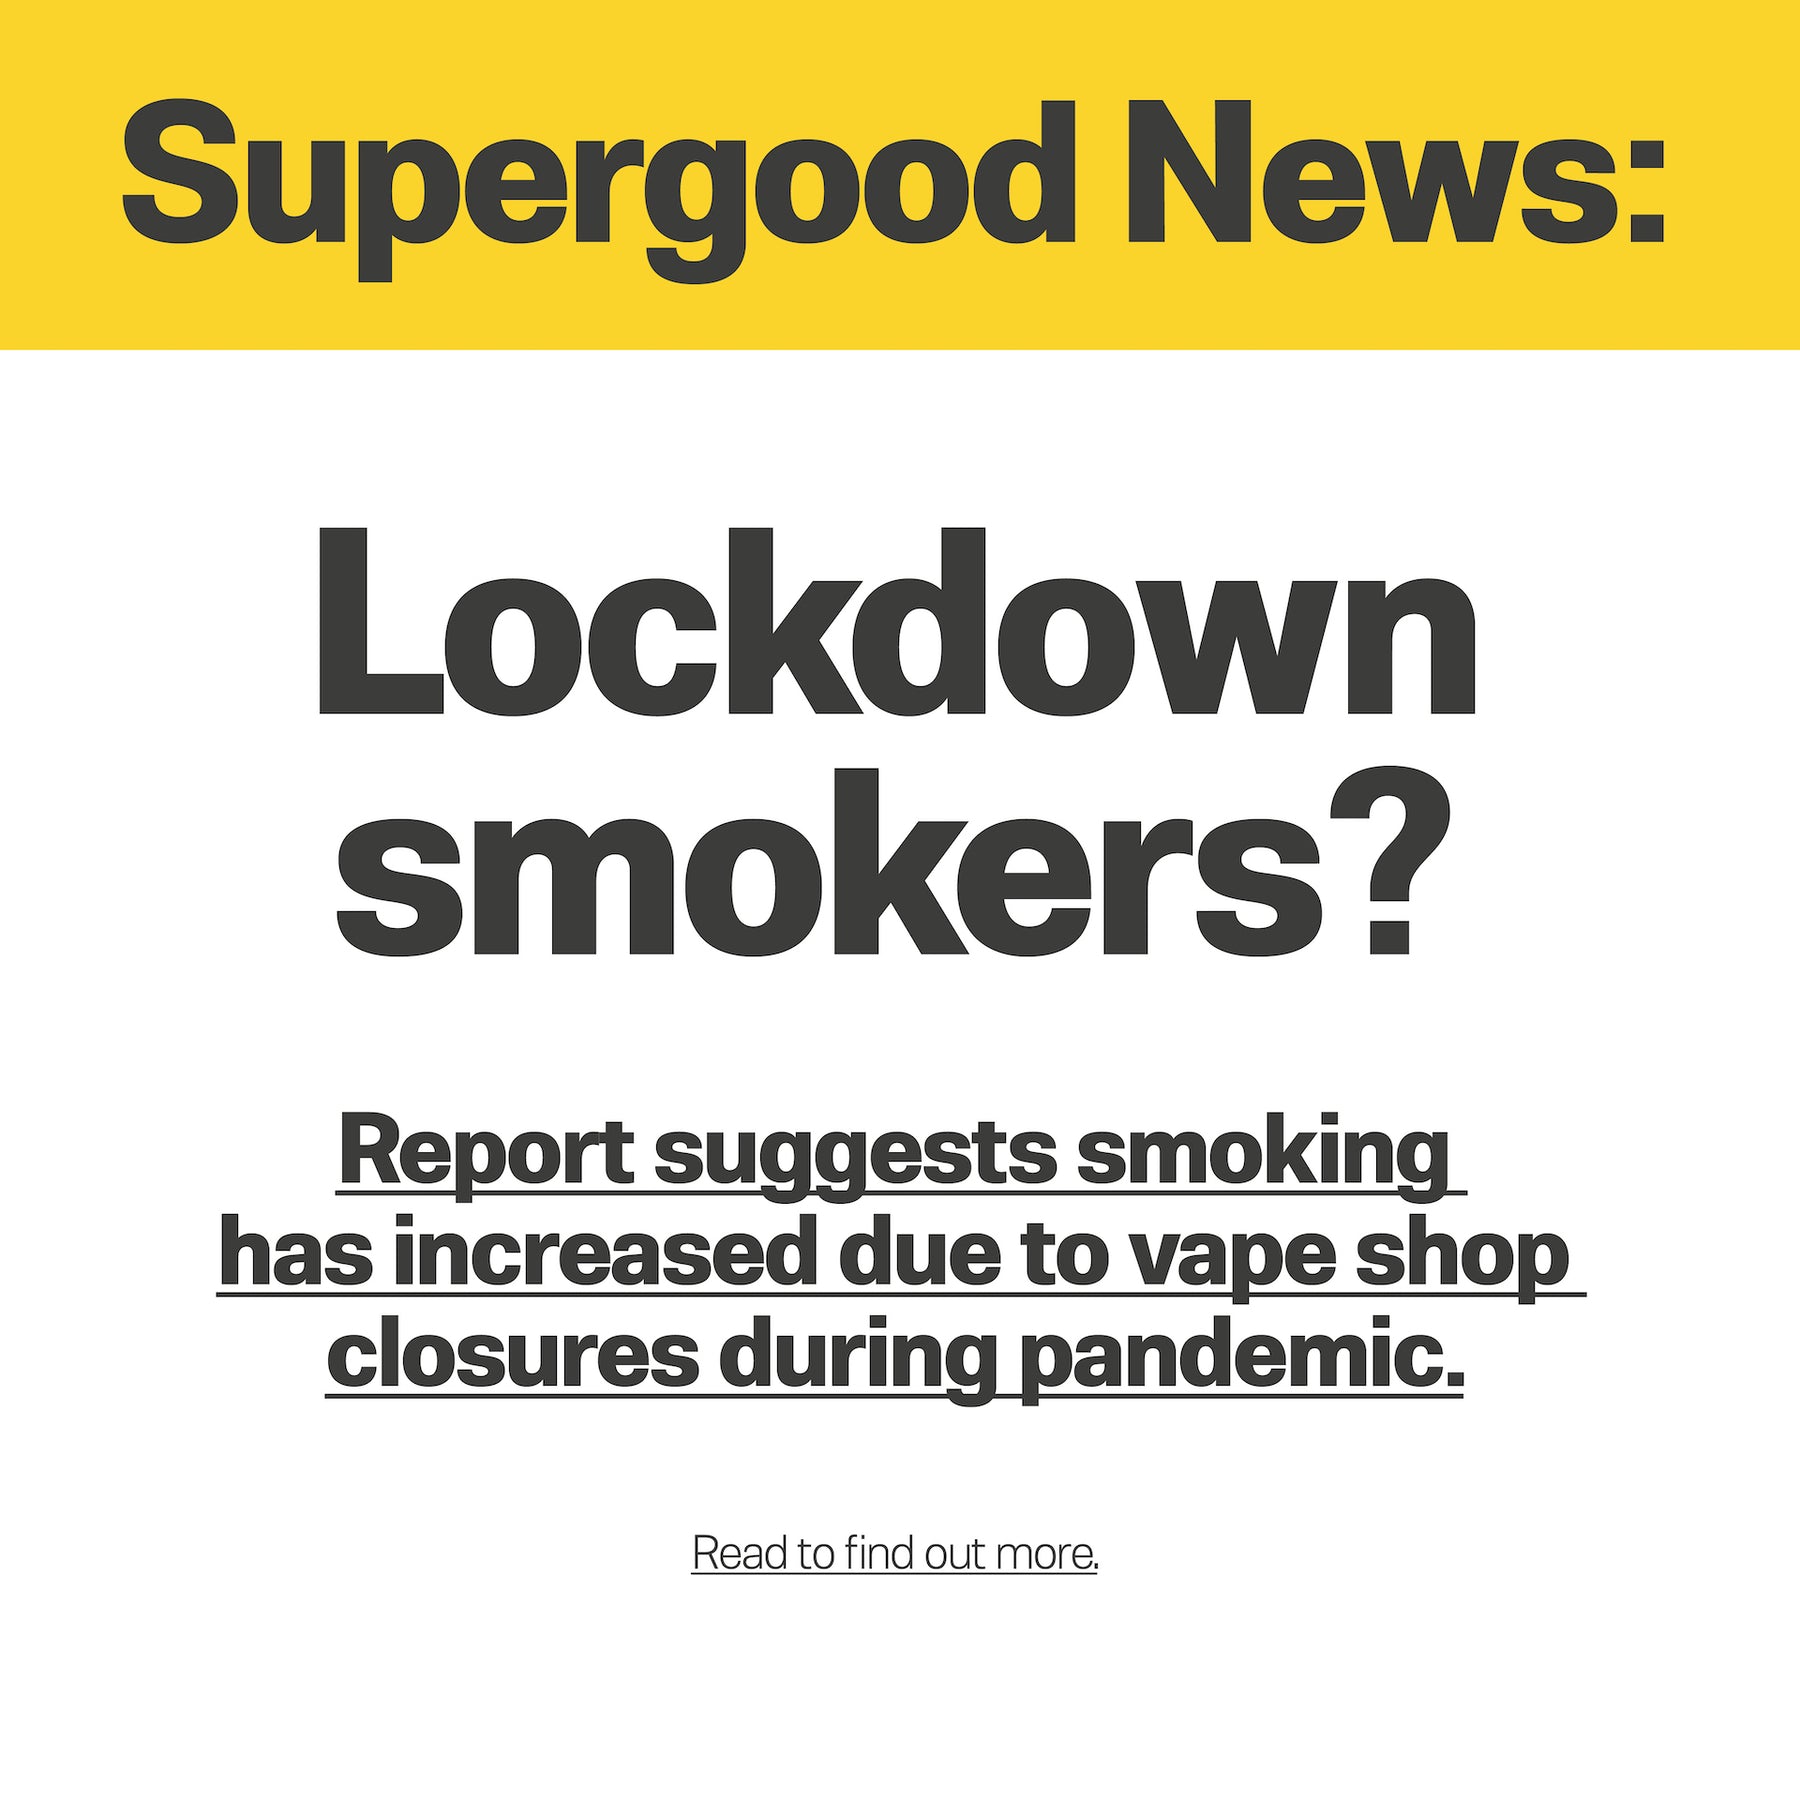 Lockdown smokers?